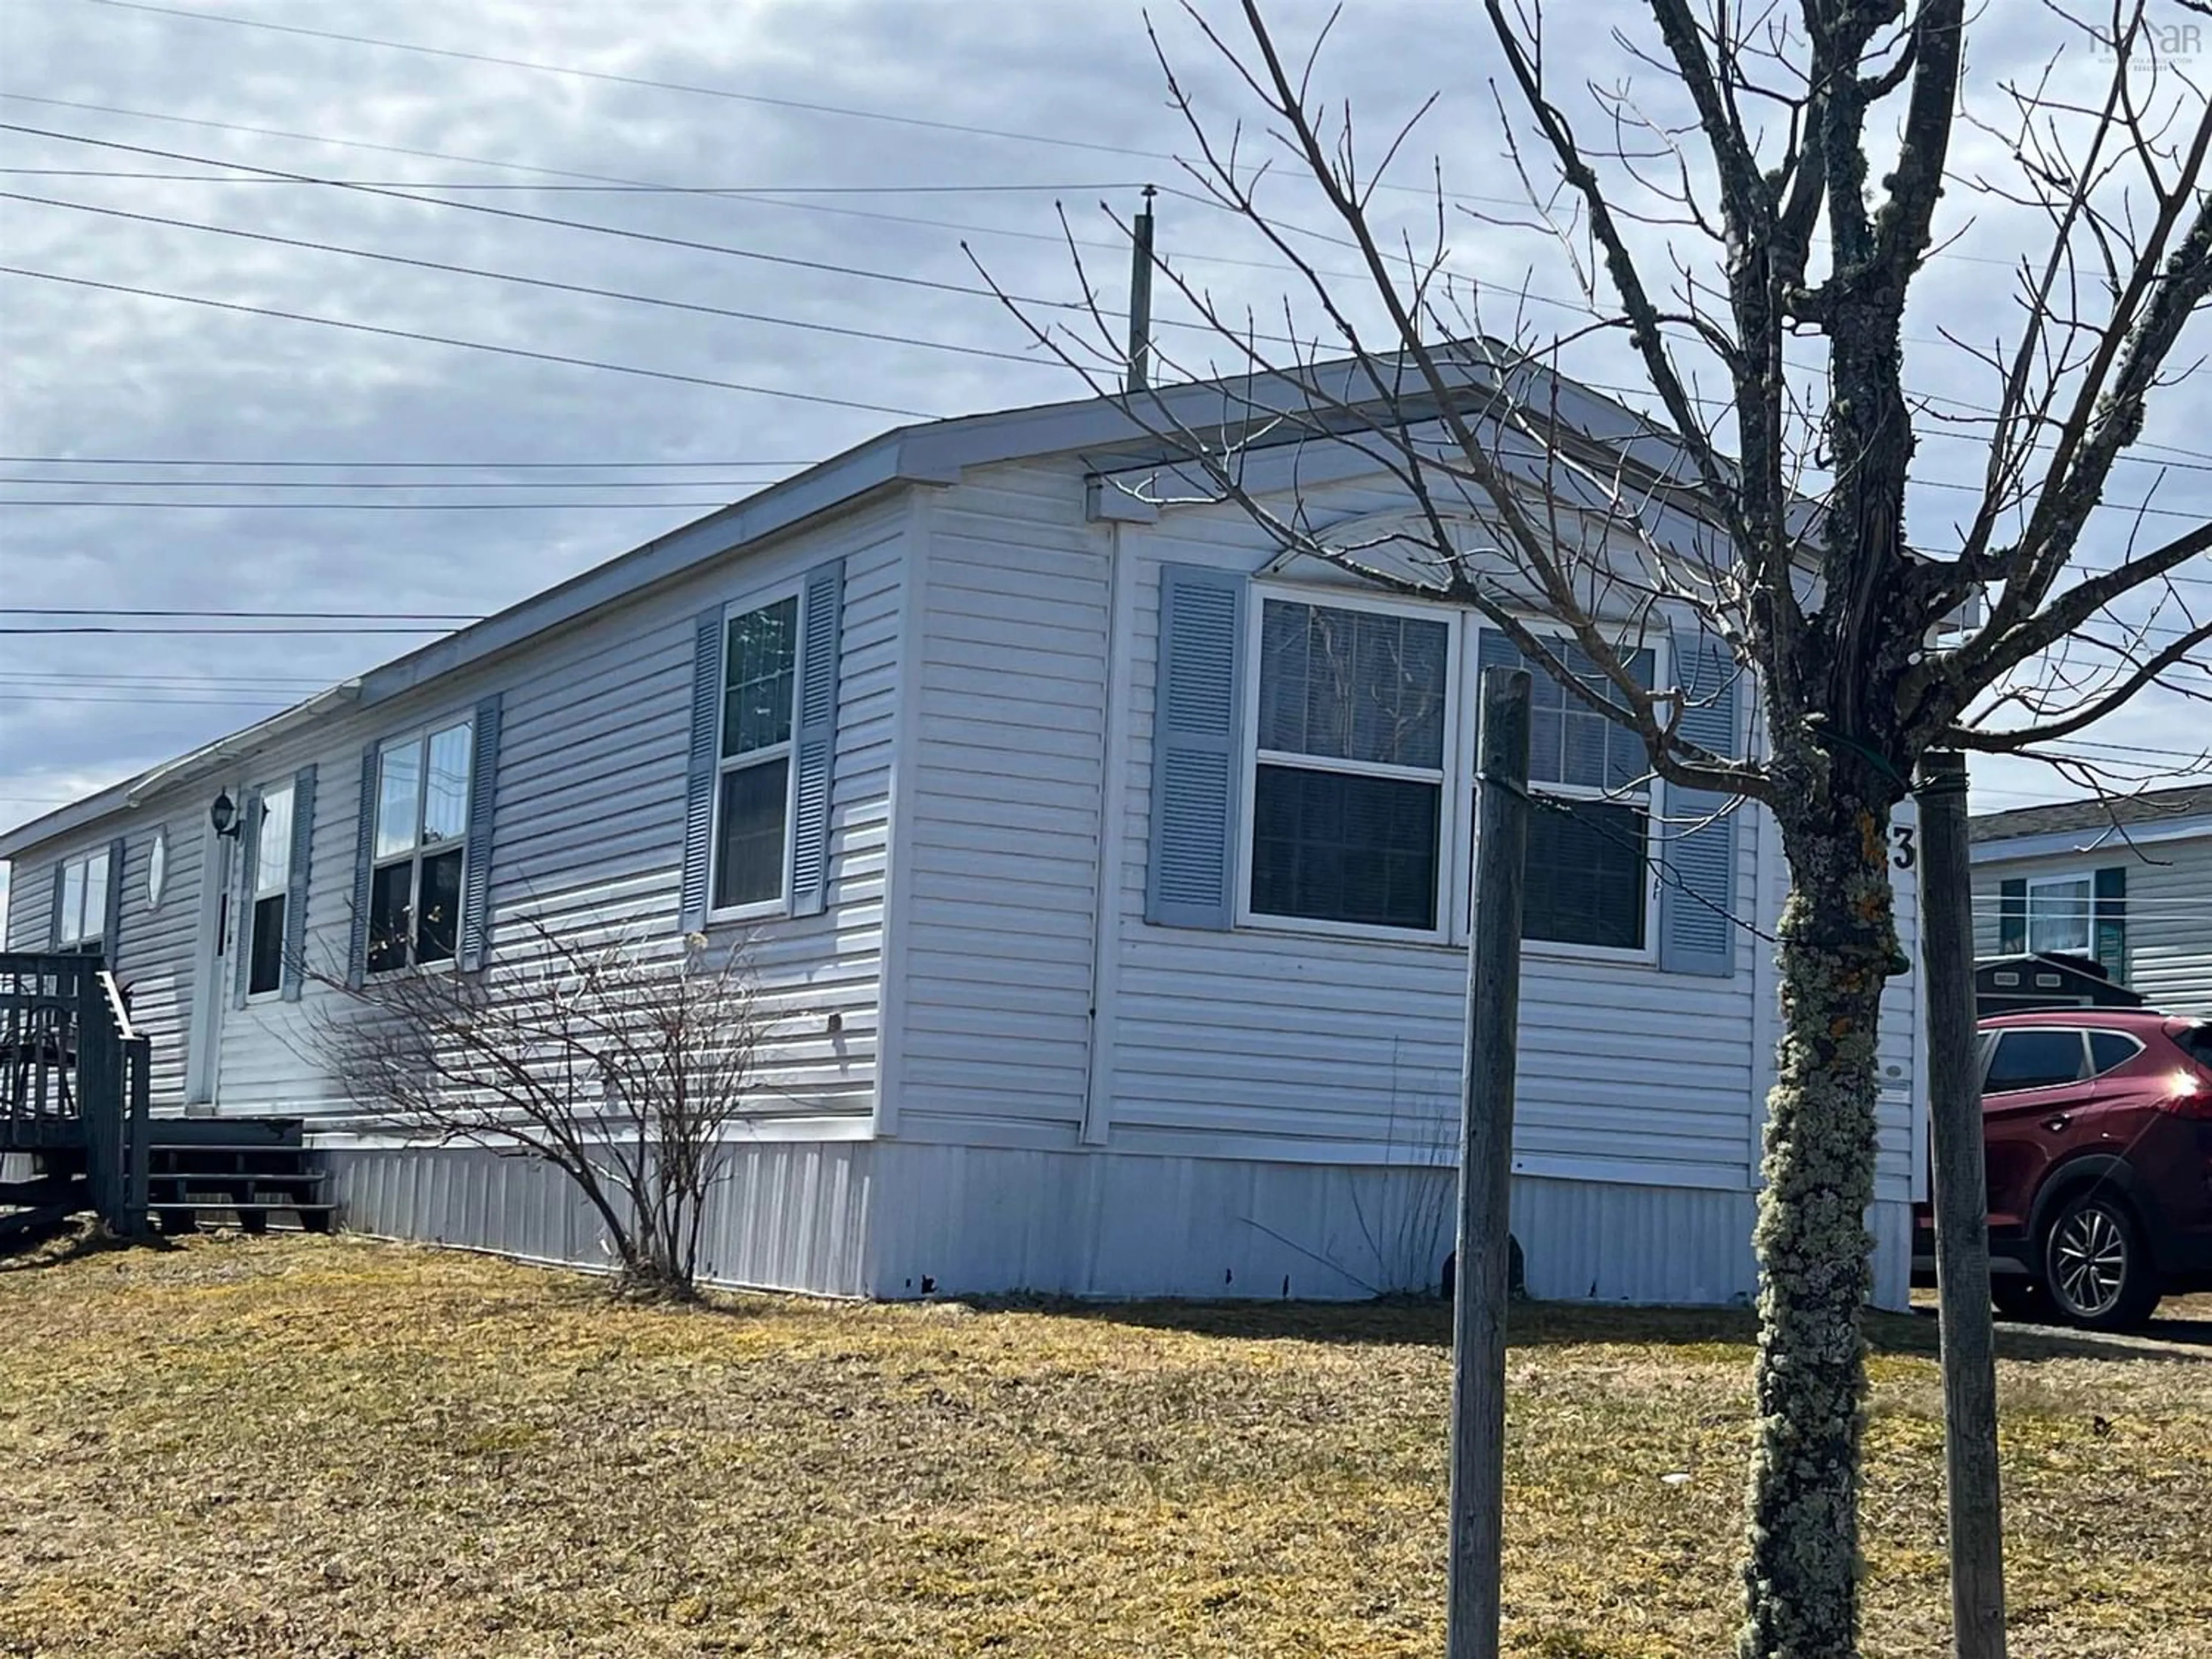 Home with unknown exterior material for 13 Greenhill Dr, Antigonish Nova Scotia B2G 2V9